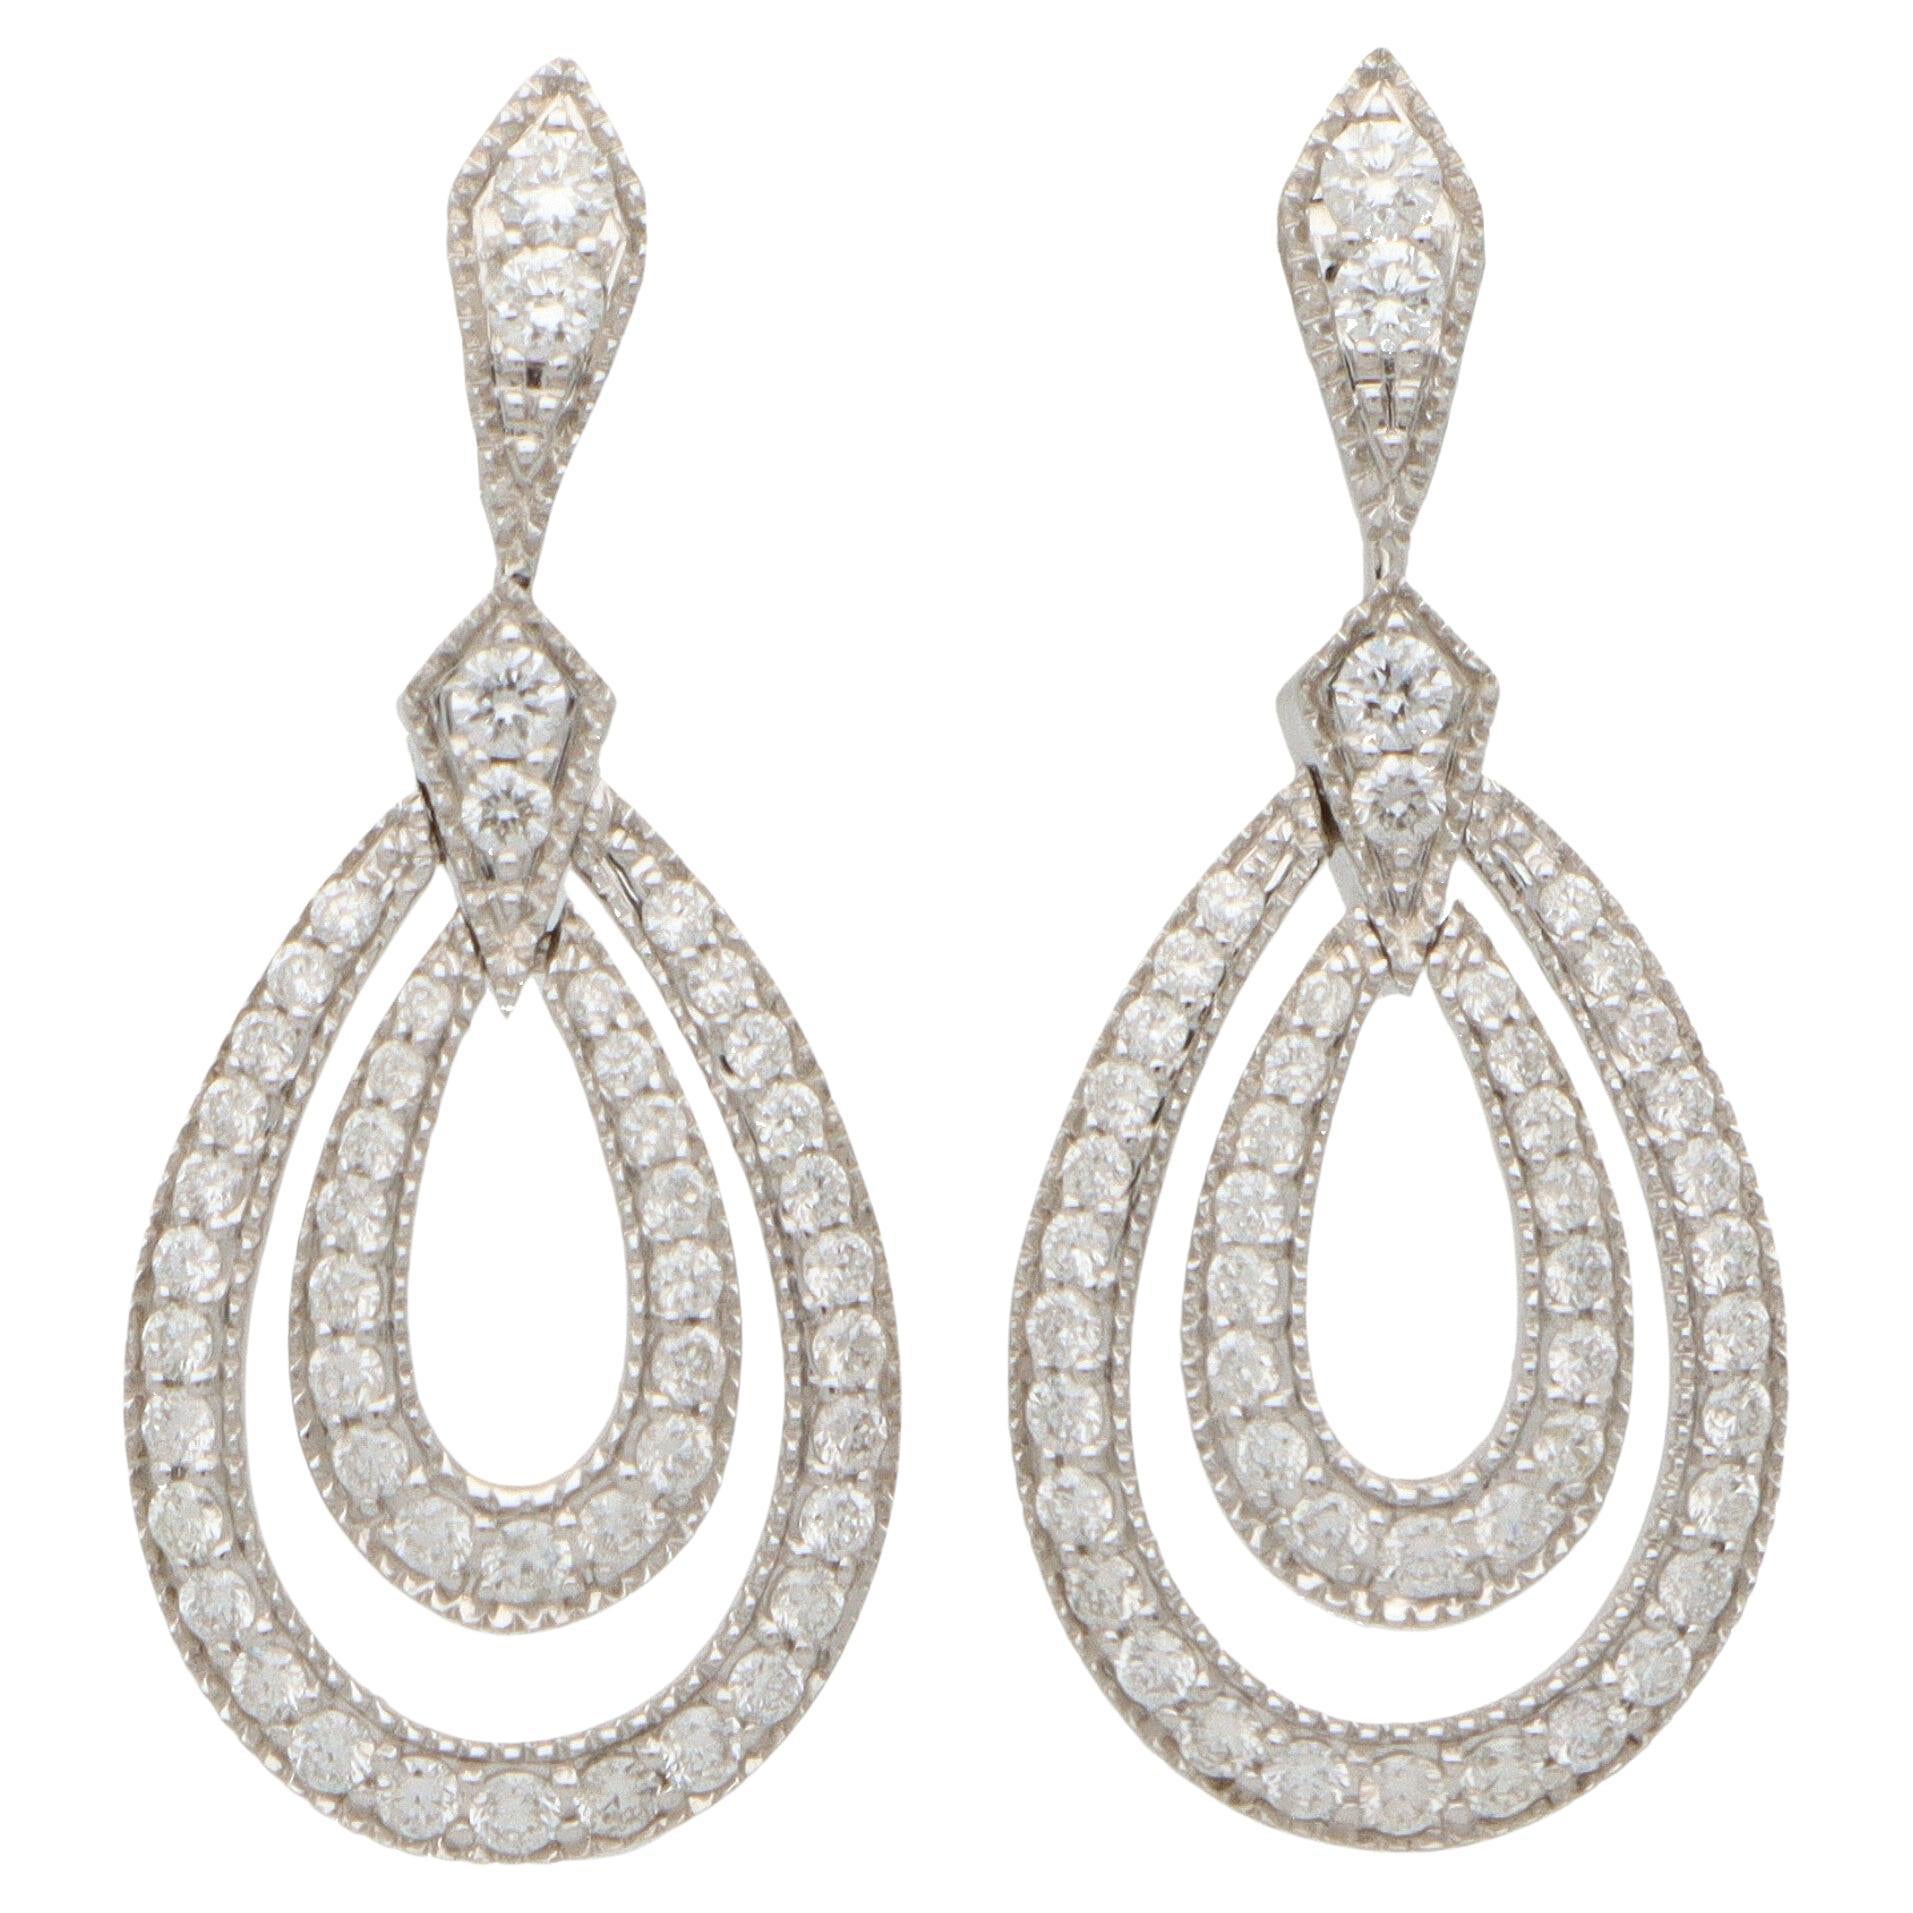 Contemporary Diamond Drop Earrings Set in 18k White Gold